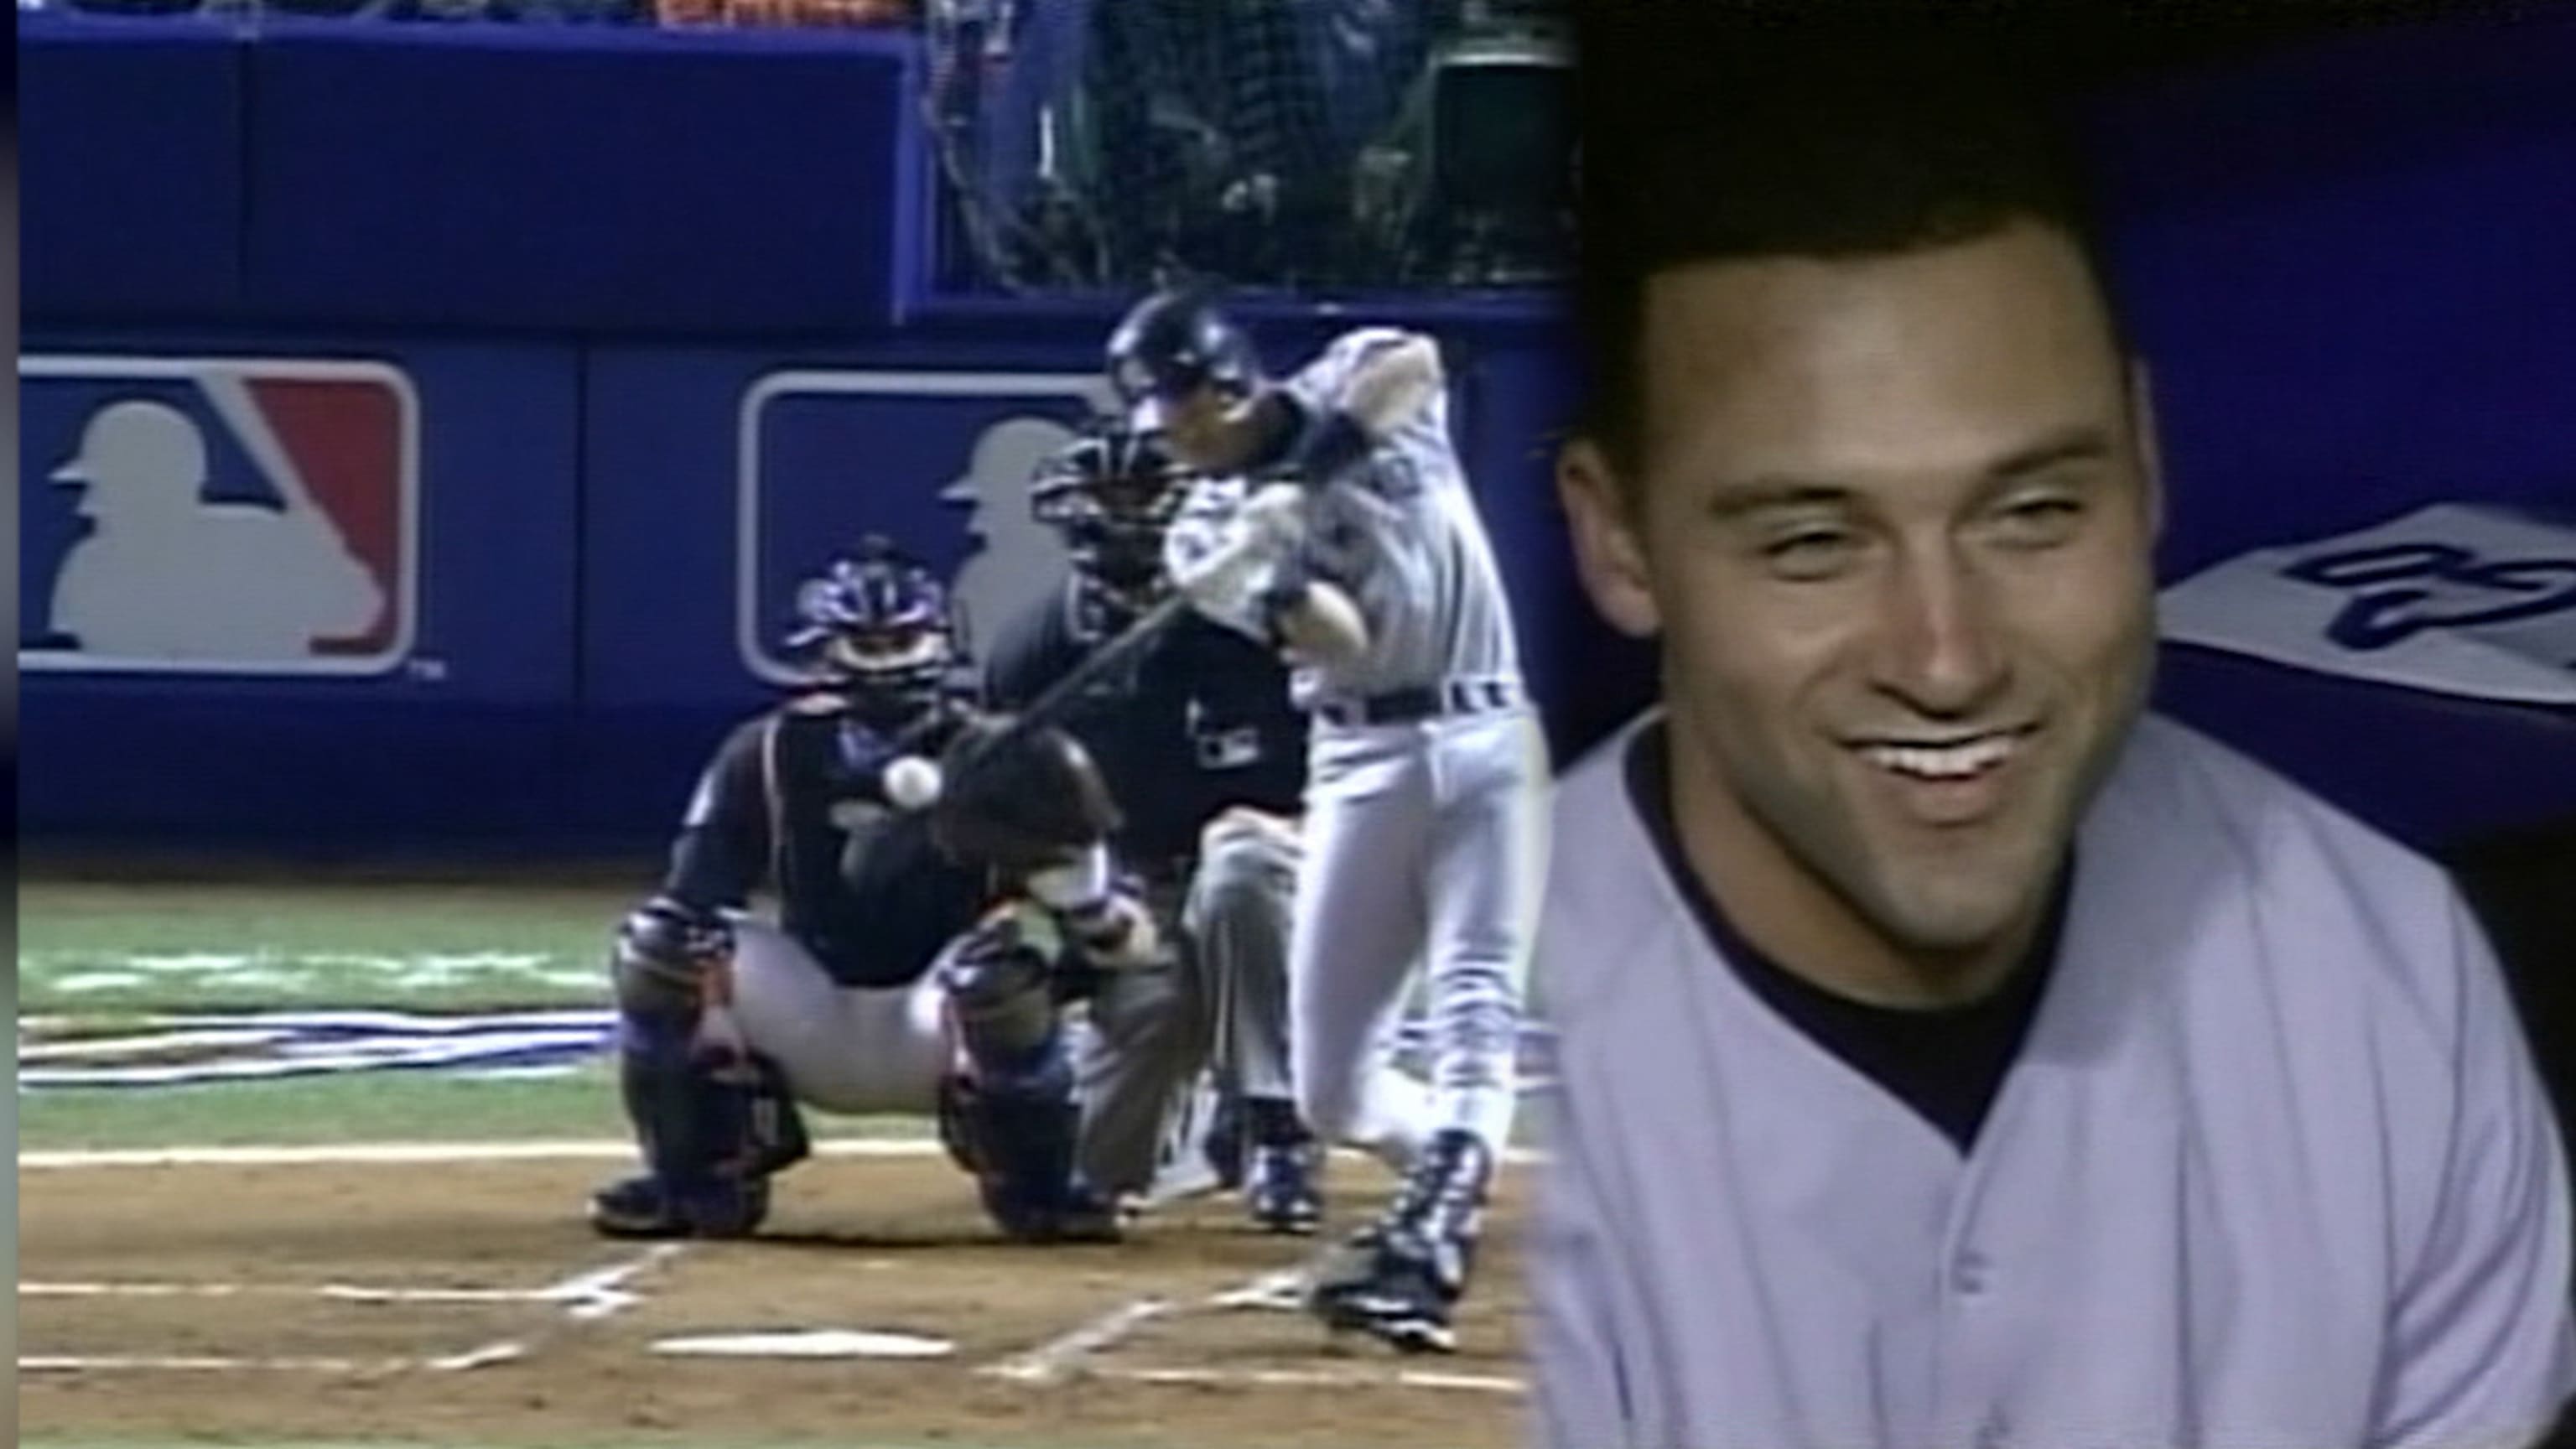 2000 Yankees' World Series title journey